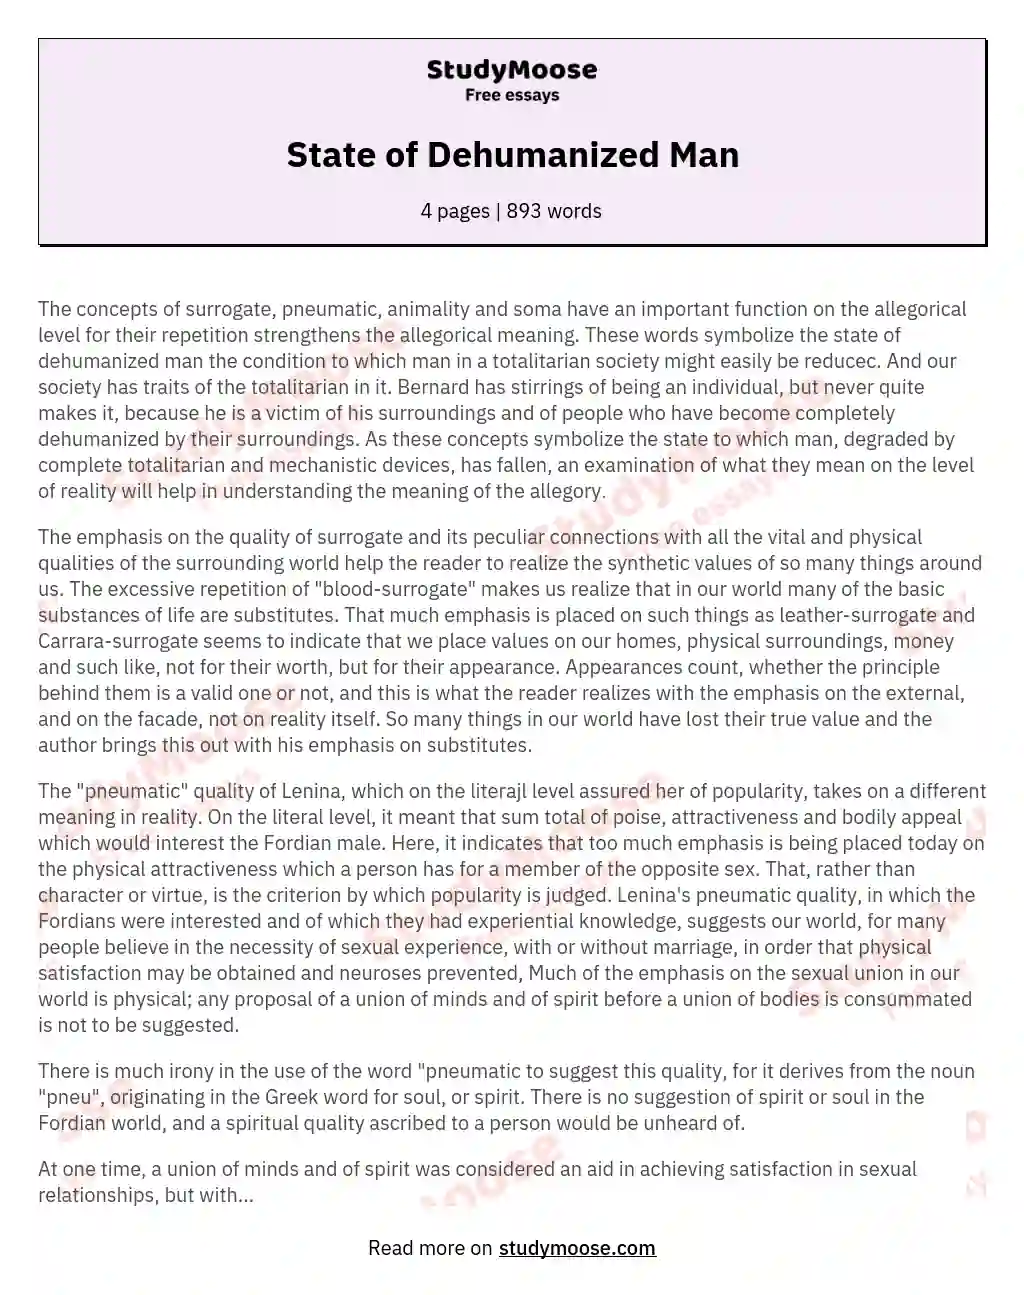 State of Dehumanized Man essay